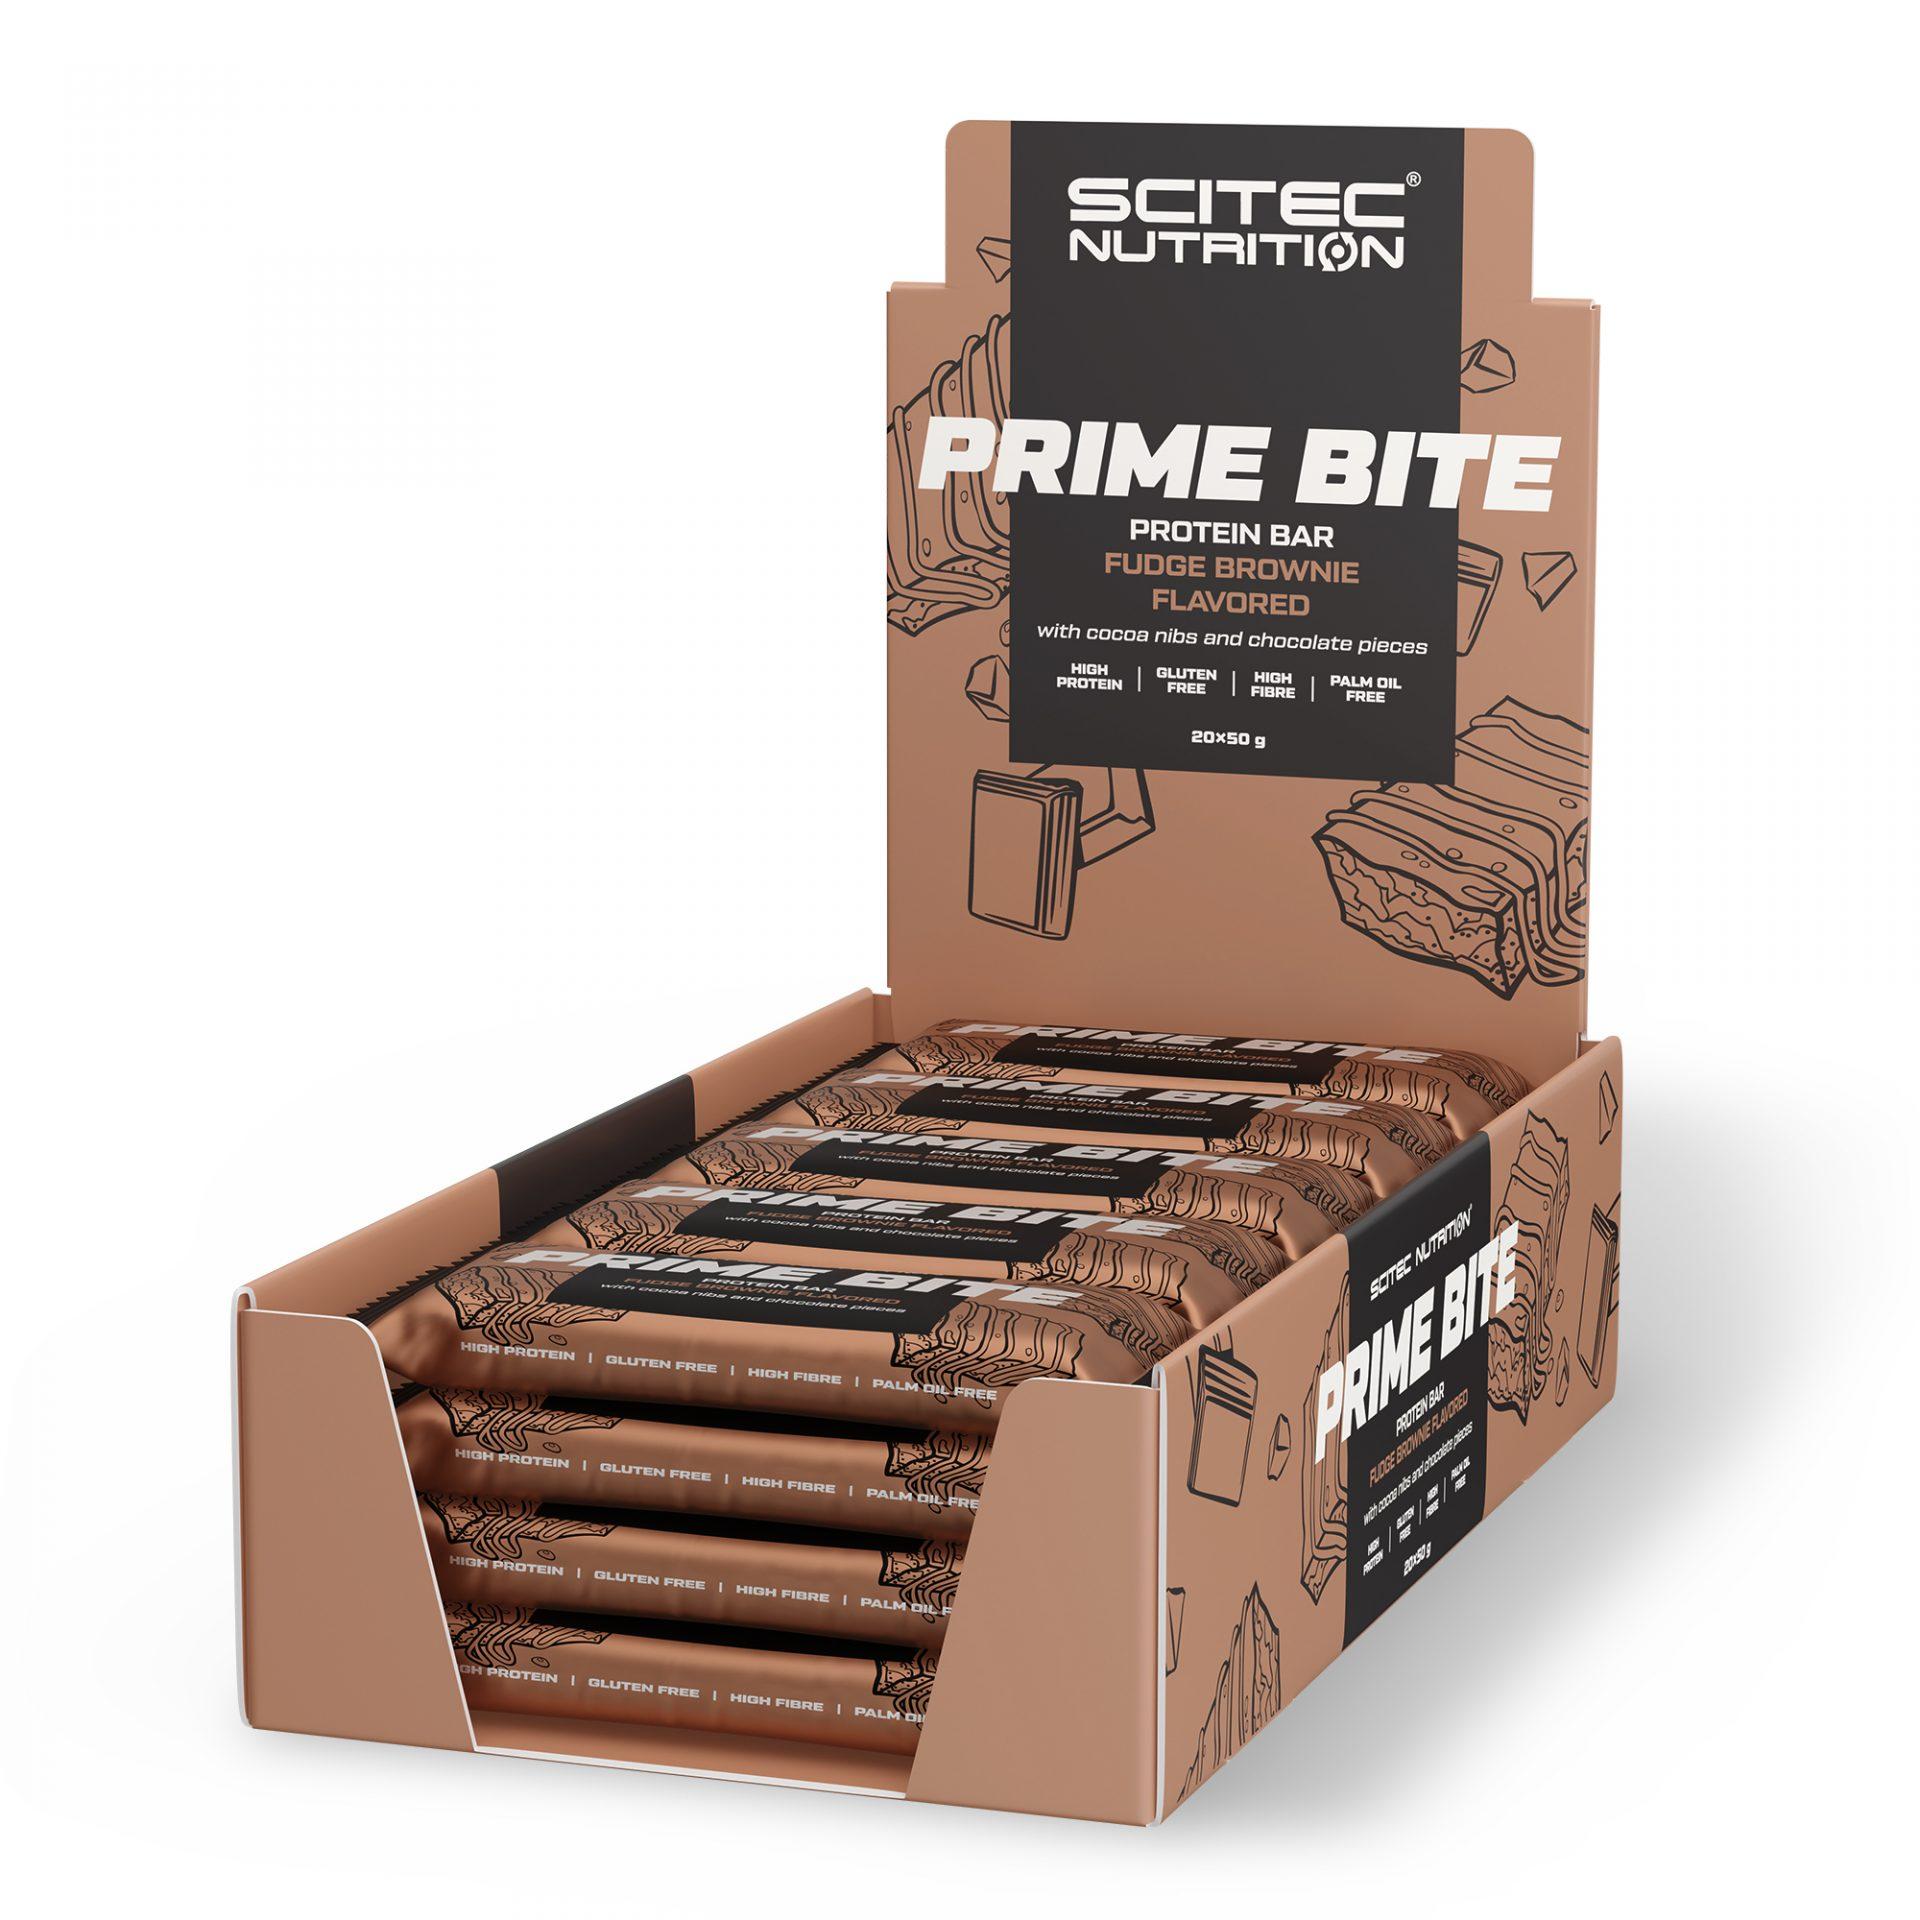 Prime_Bite_Fudge_Brownie_Box